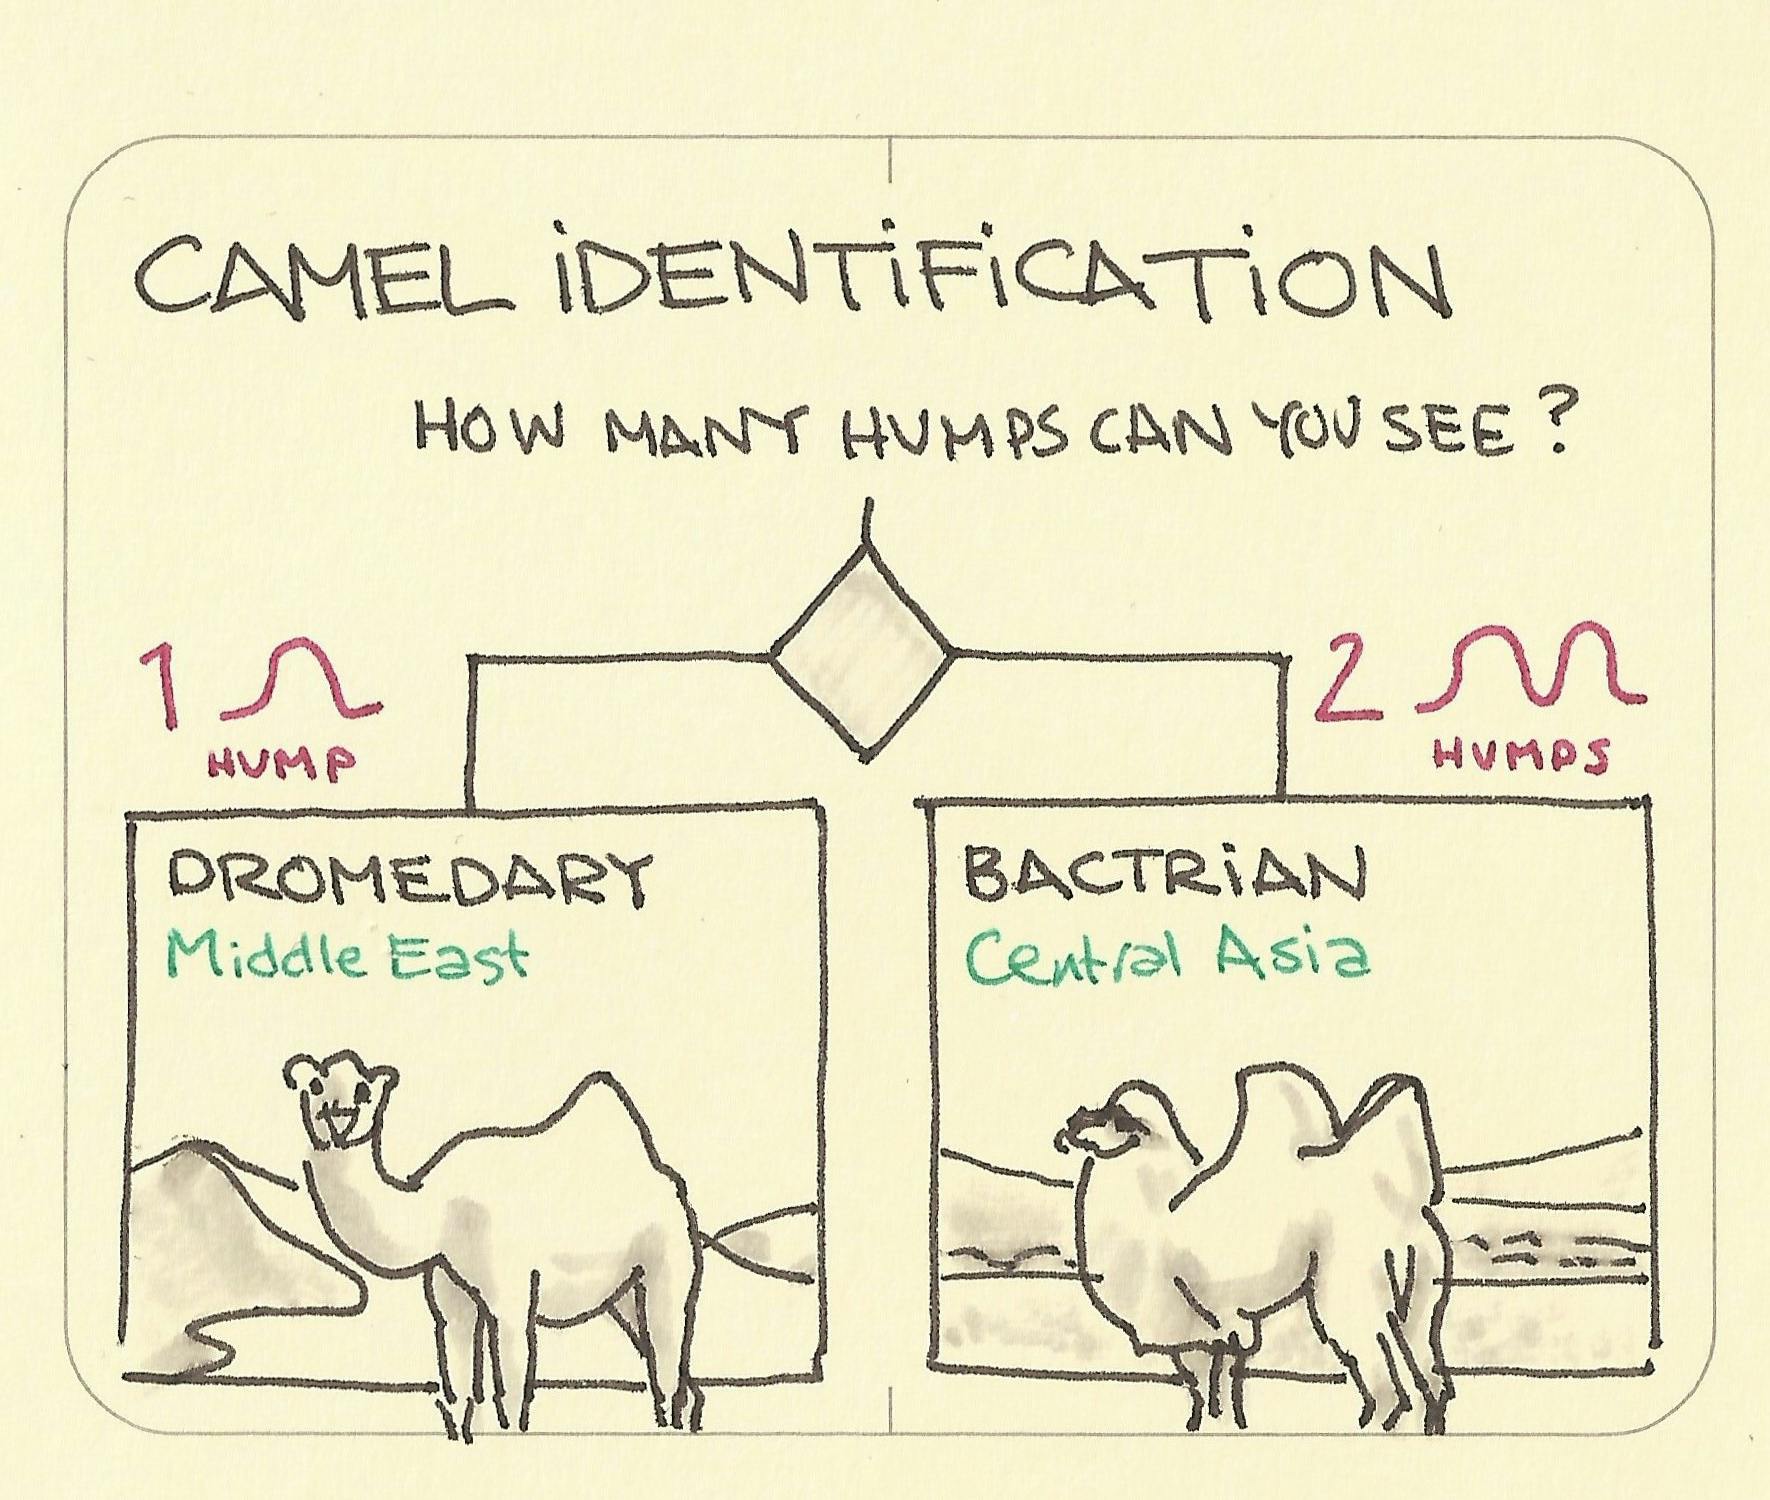 Camel identification: 1 hump dromedary, 2 humps bactrian - Sketchplanations